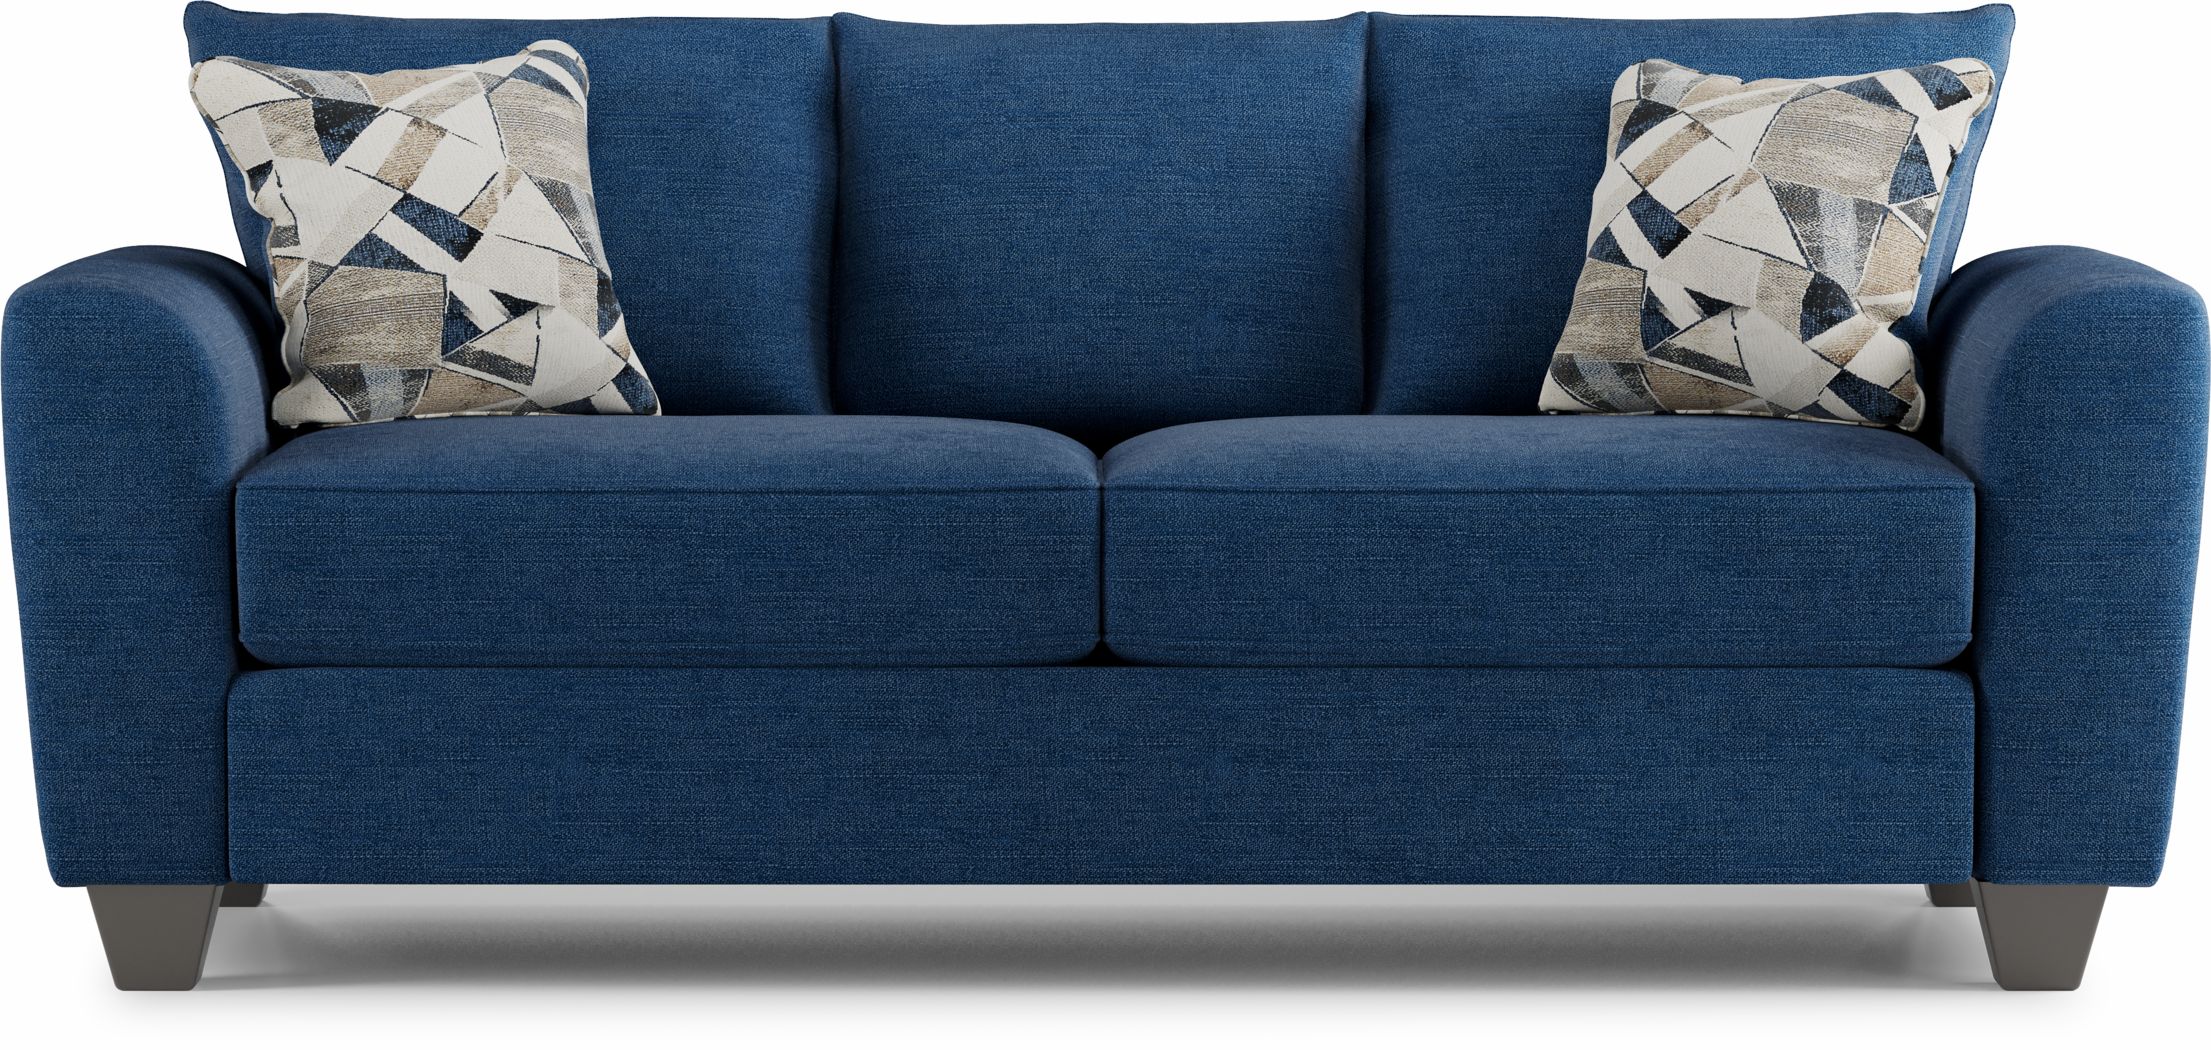 Blue Suede Sleeper Sofa Baci Living Room